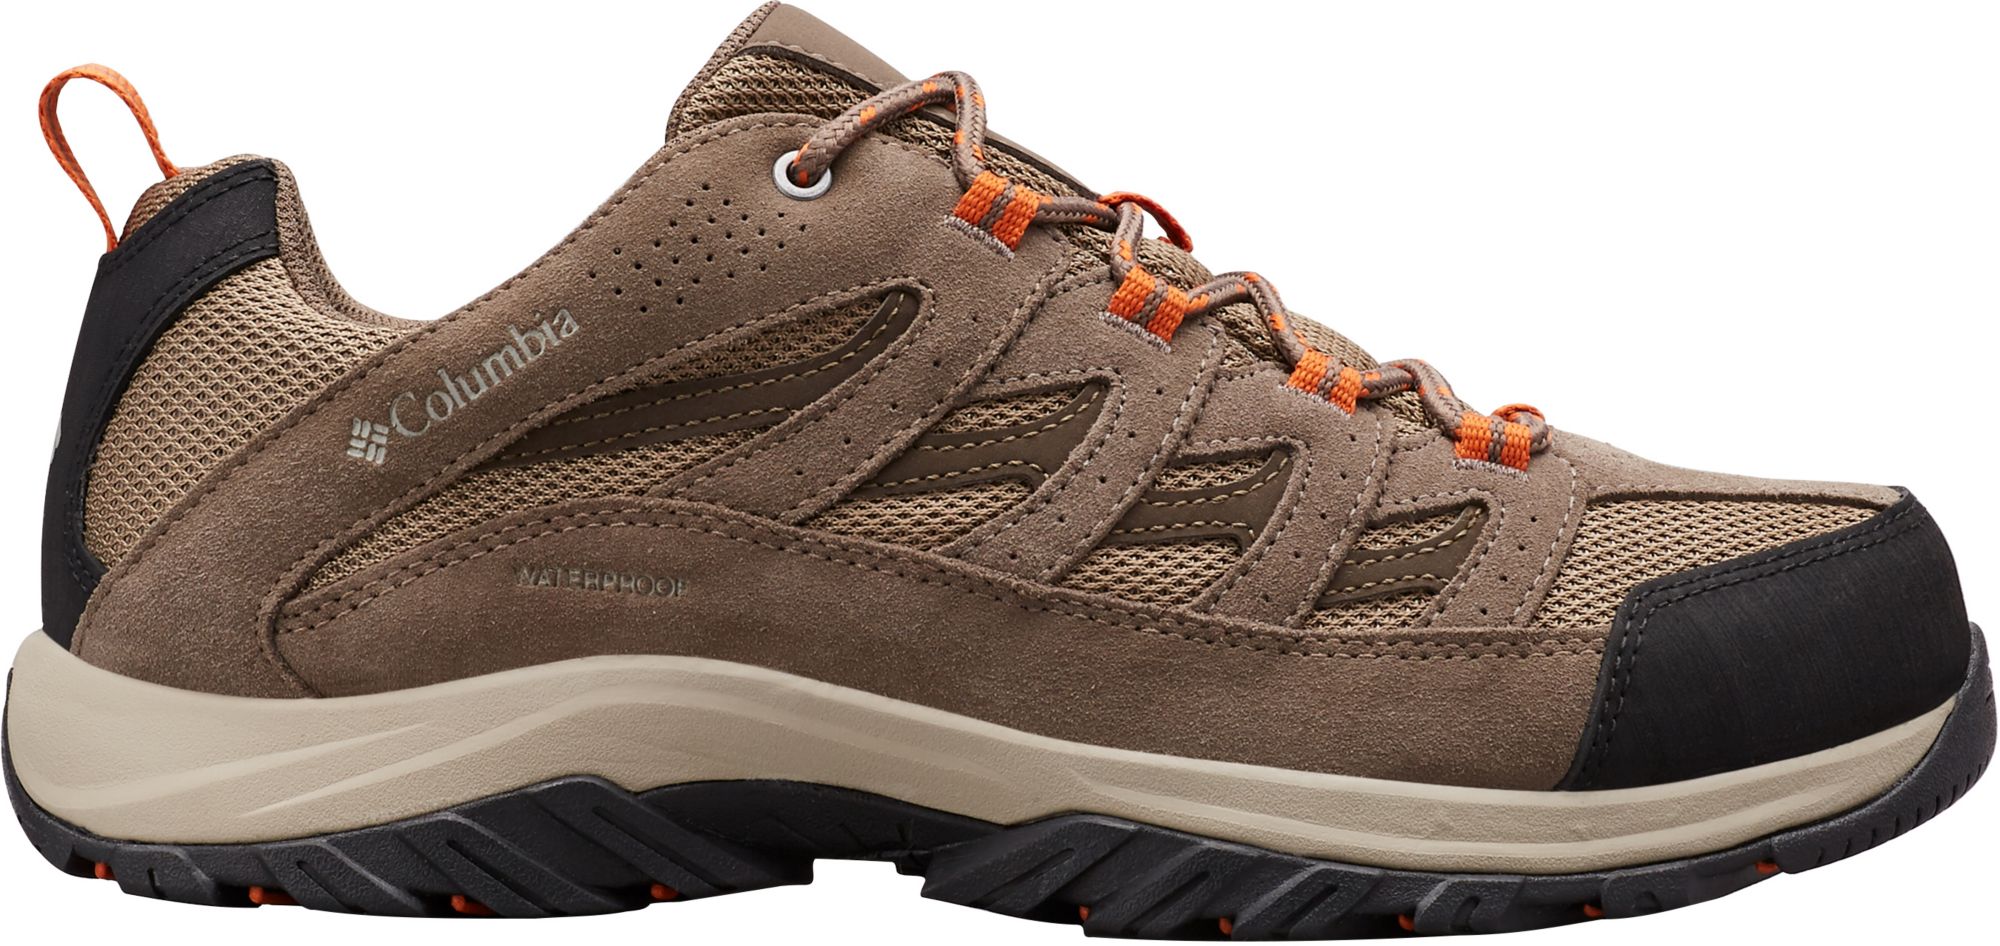 columbia crestwood hiking shoe